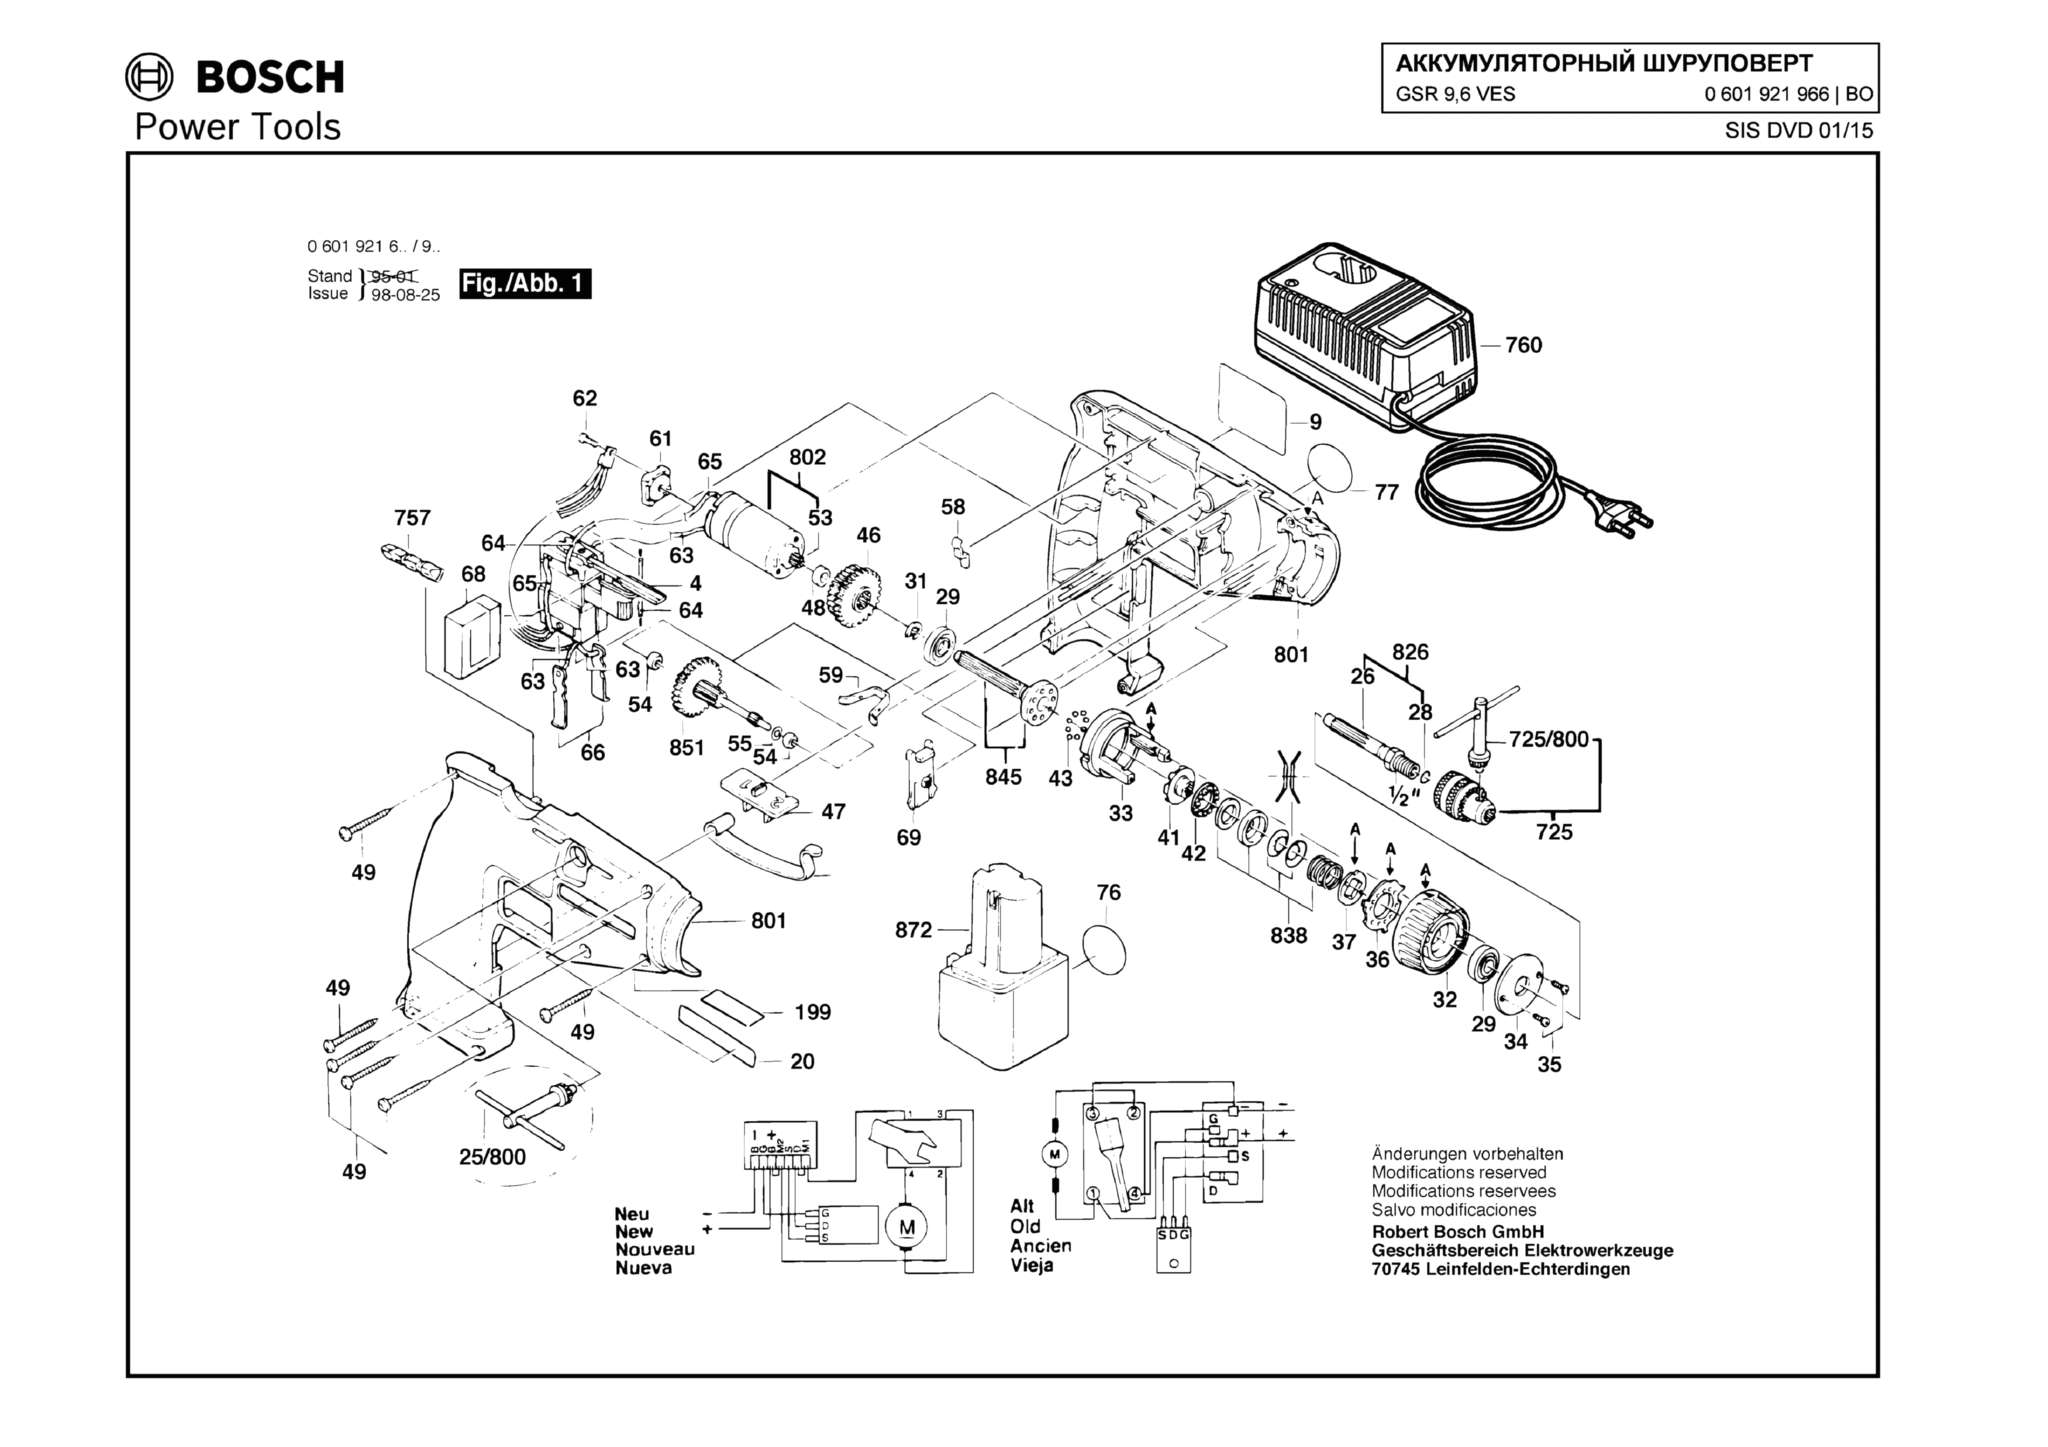 Запчасти, схема и деталировка Bosch GSR 9,6 VES (ТИП 0601921966)